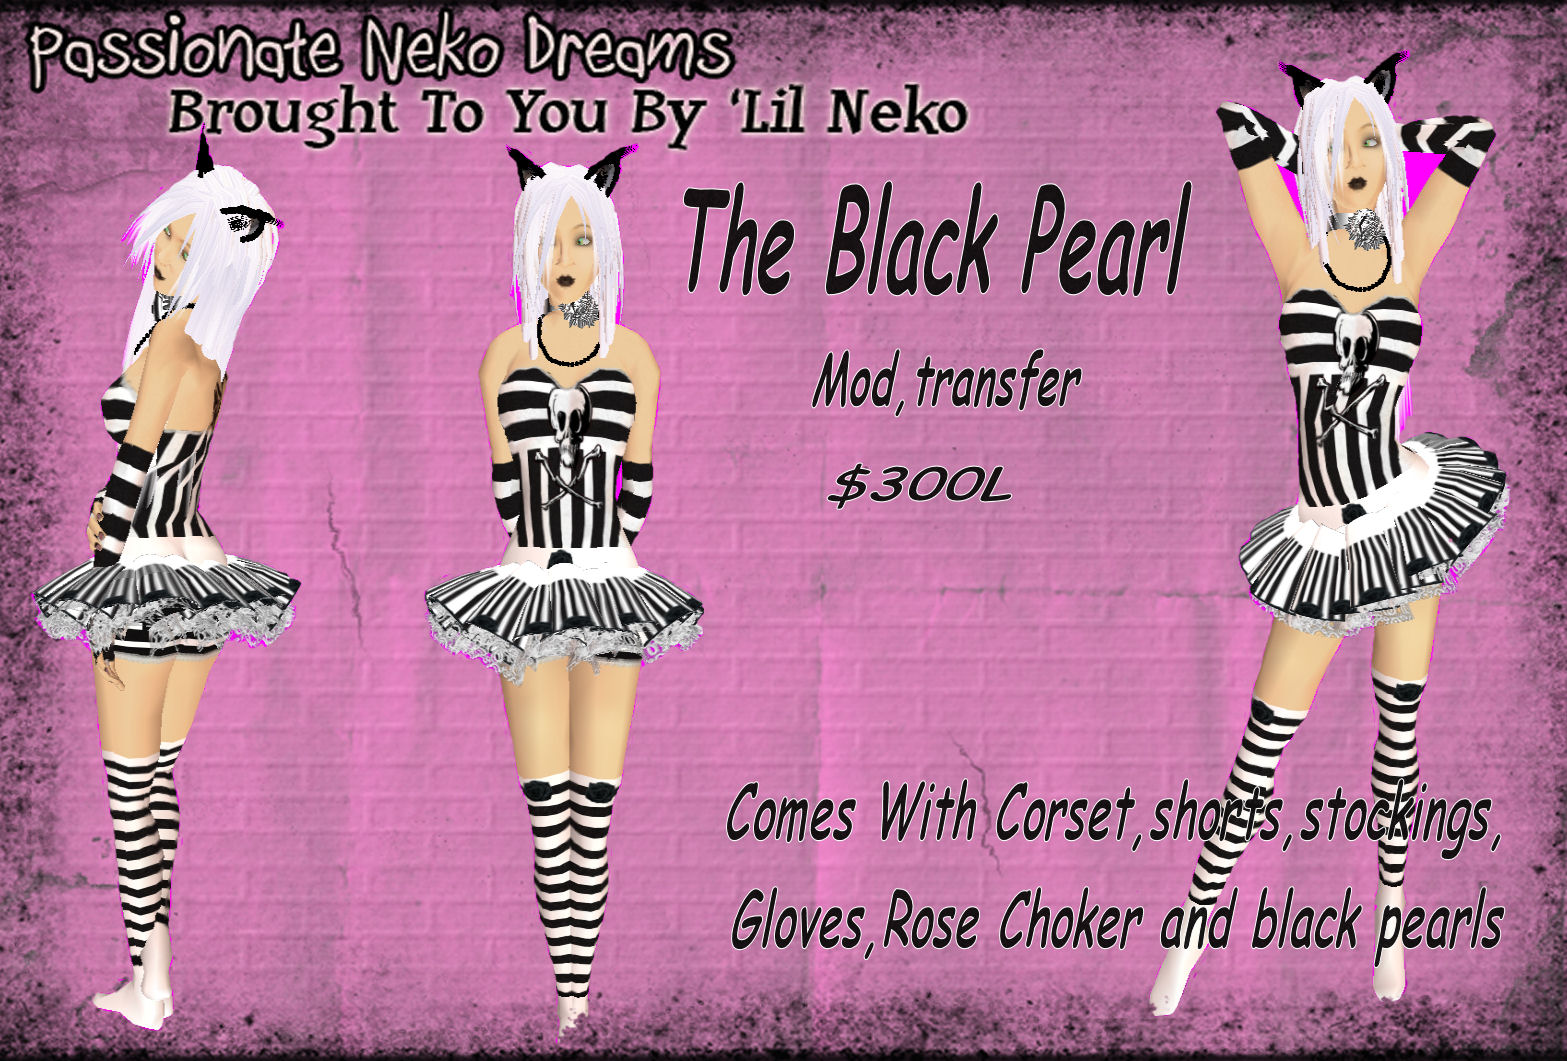 [The+Black+Pearl+ad.jpg]